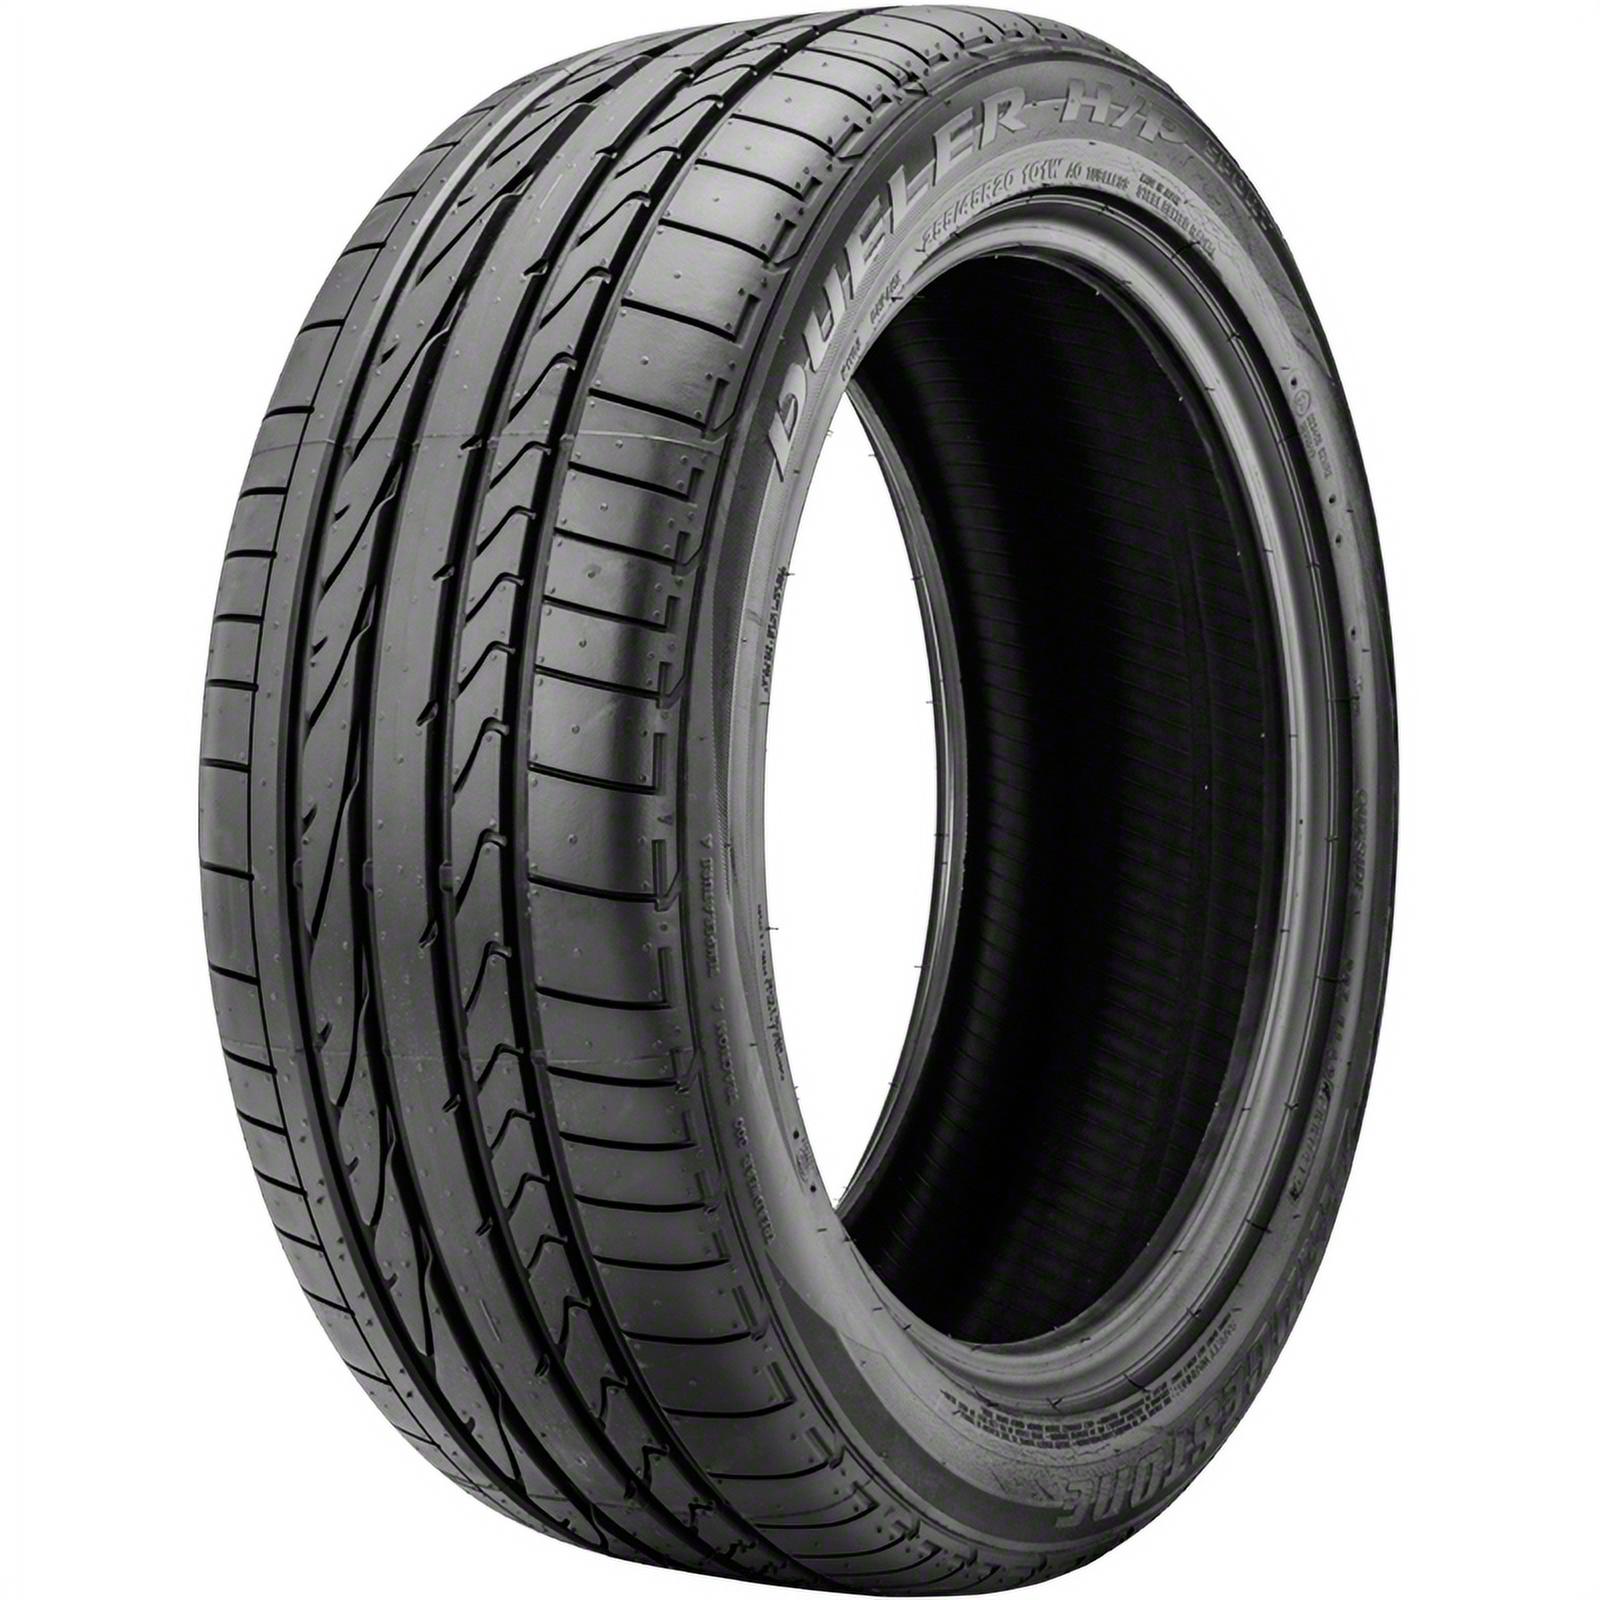 Bridgestone Dueler H/P Sport AS 245/60R18 105 H Tire - image 1 of 3